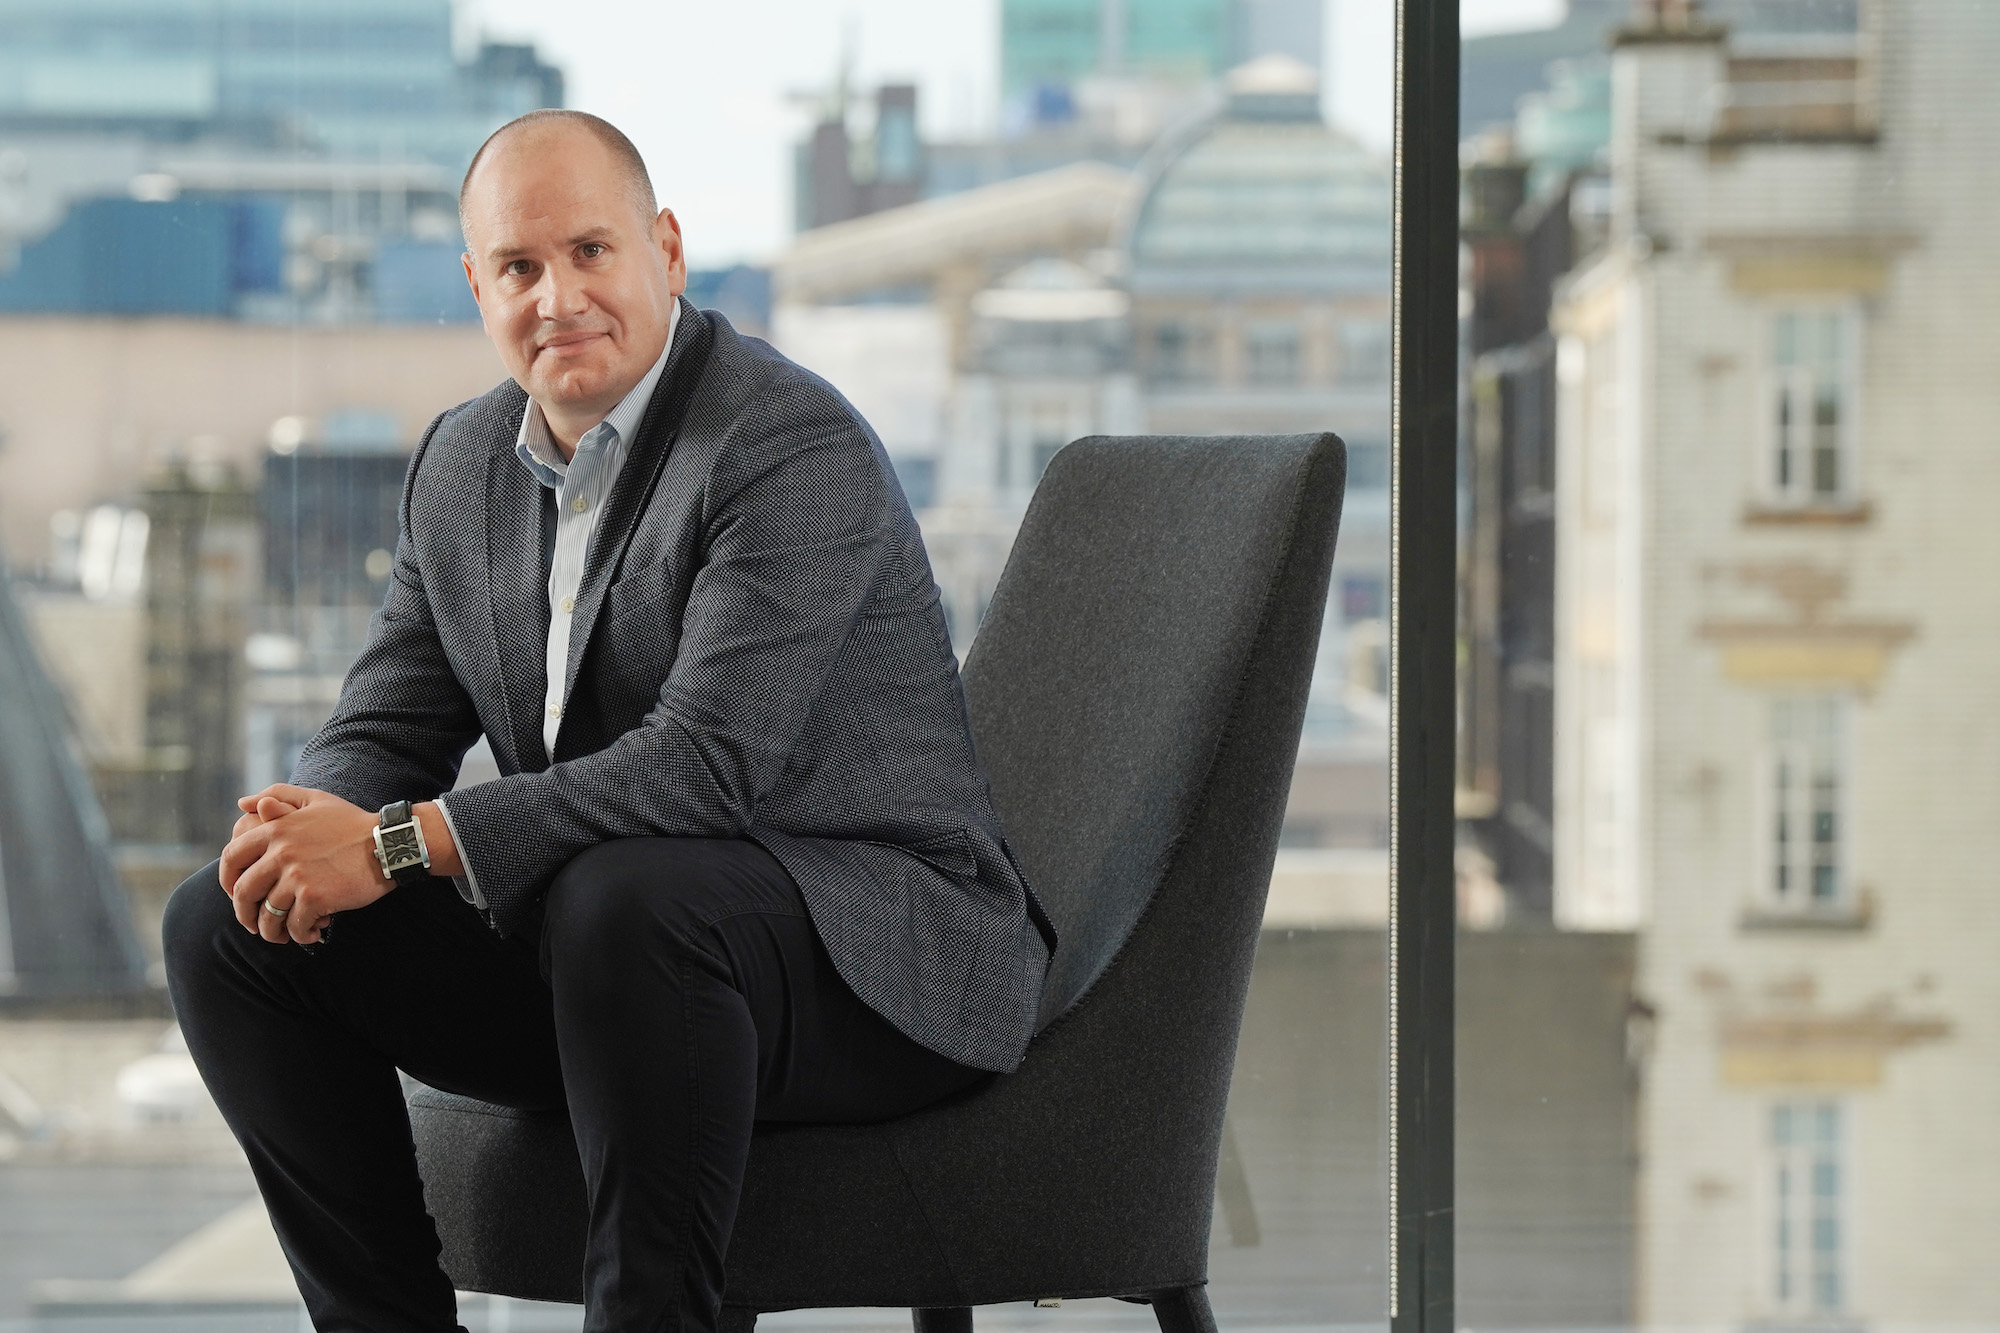 Paul Hazelton ascends to audit partner at Deloitte Scotland among wave of promotions